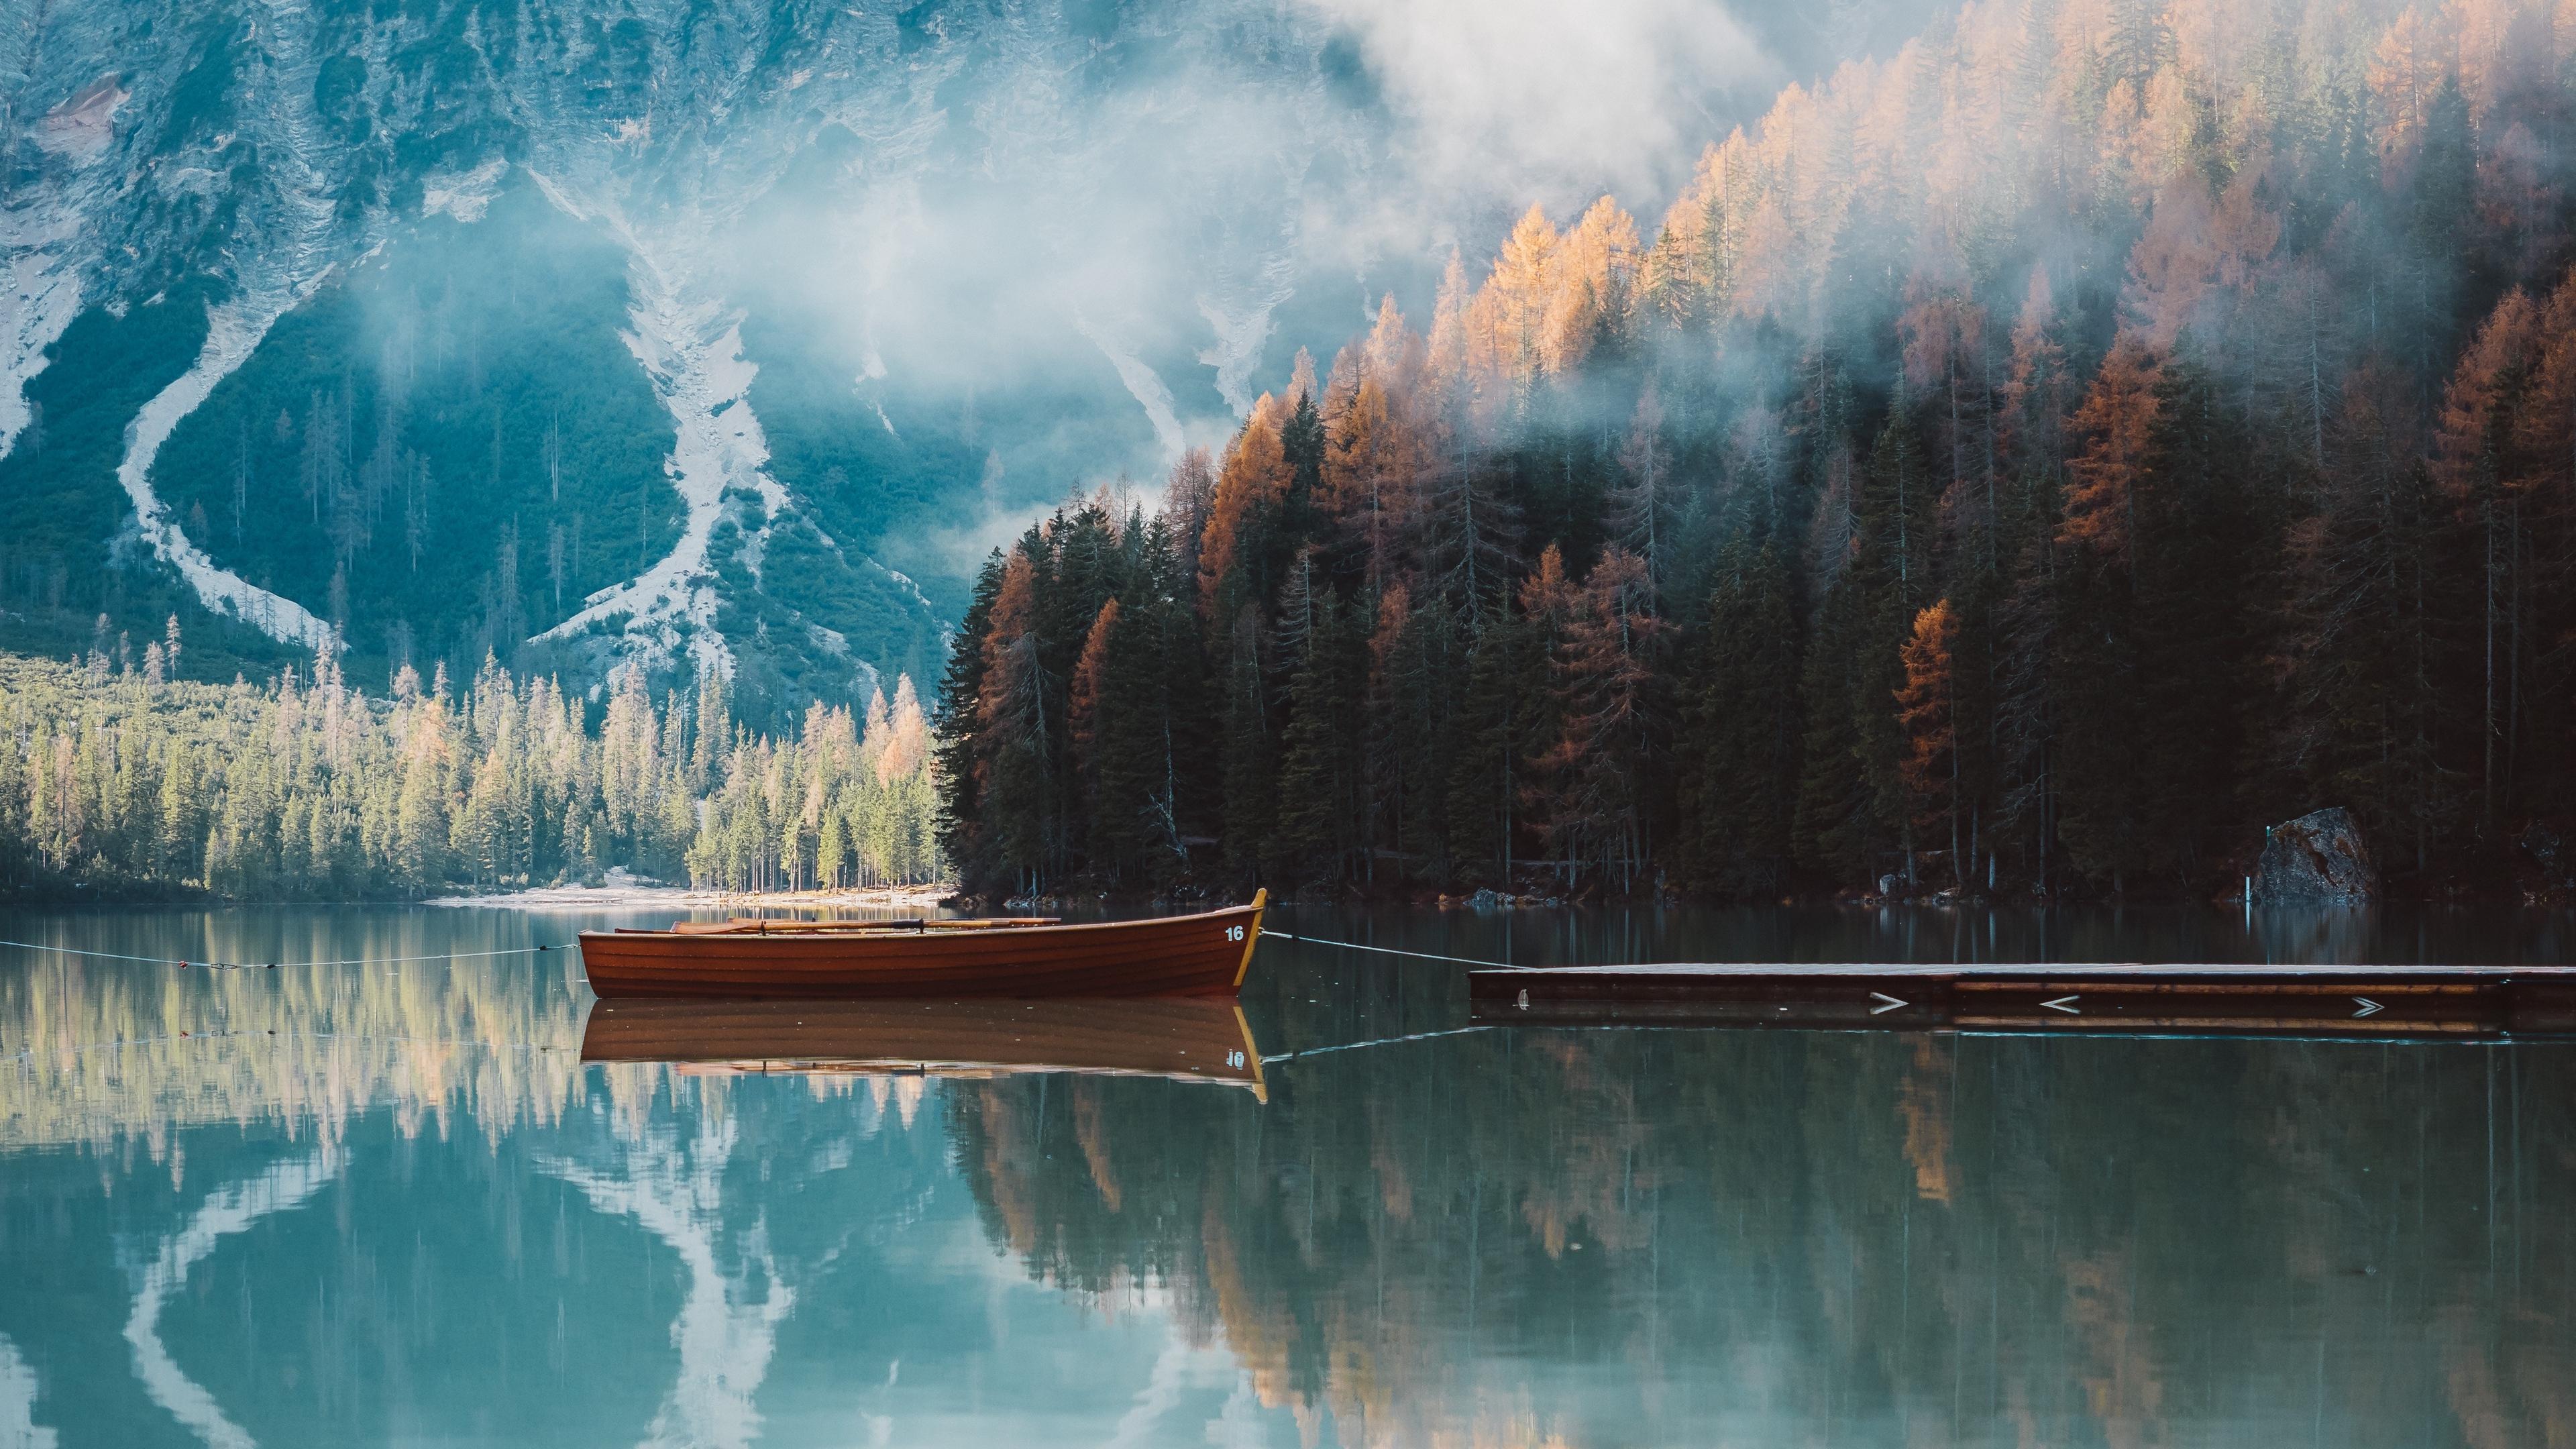 Download wallpaper 3840x2160 boat, mountains, lake, trees, autumn